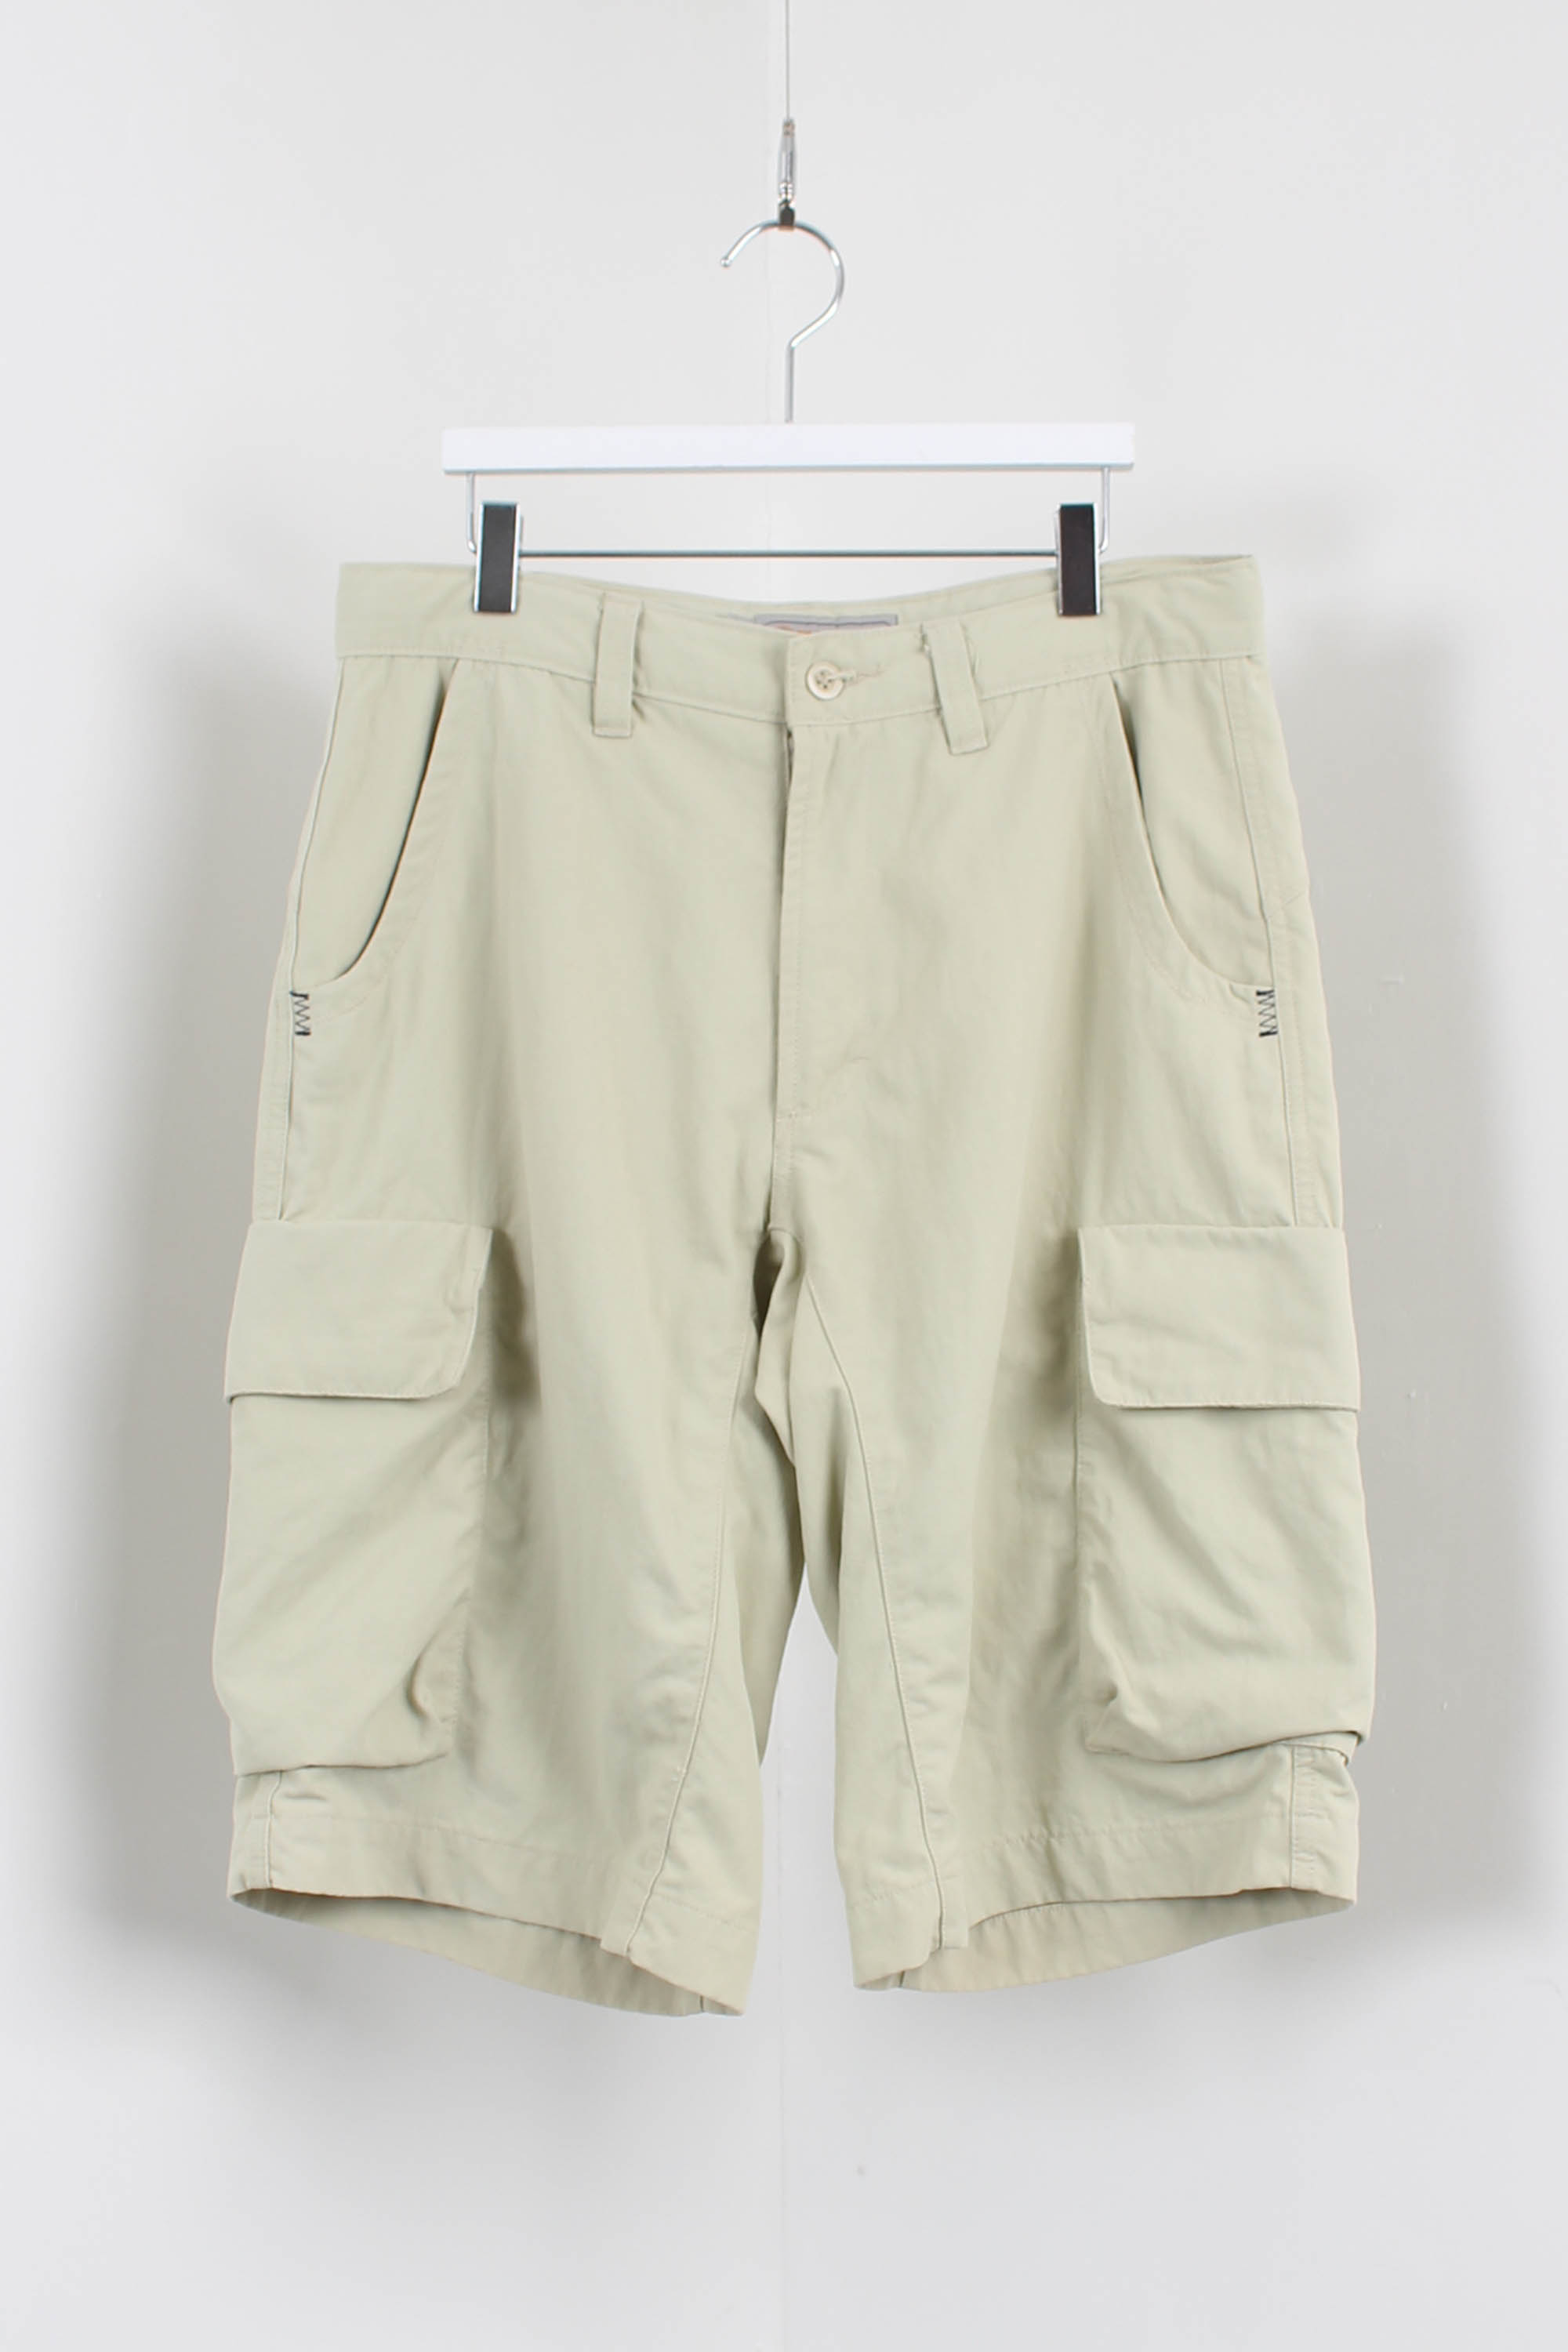 Timberland shorts